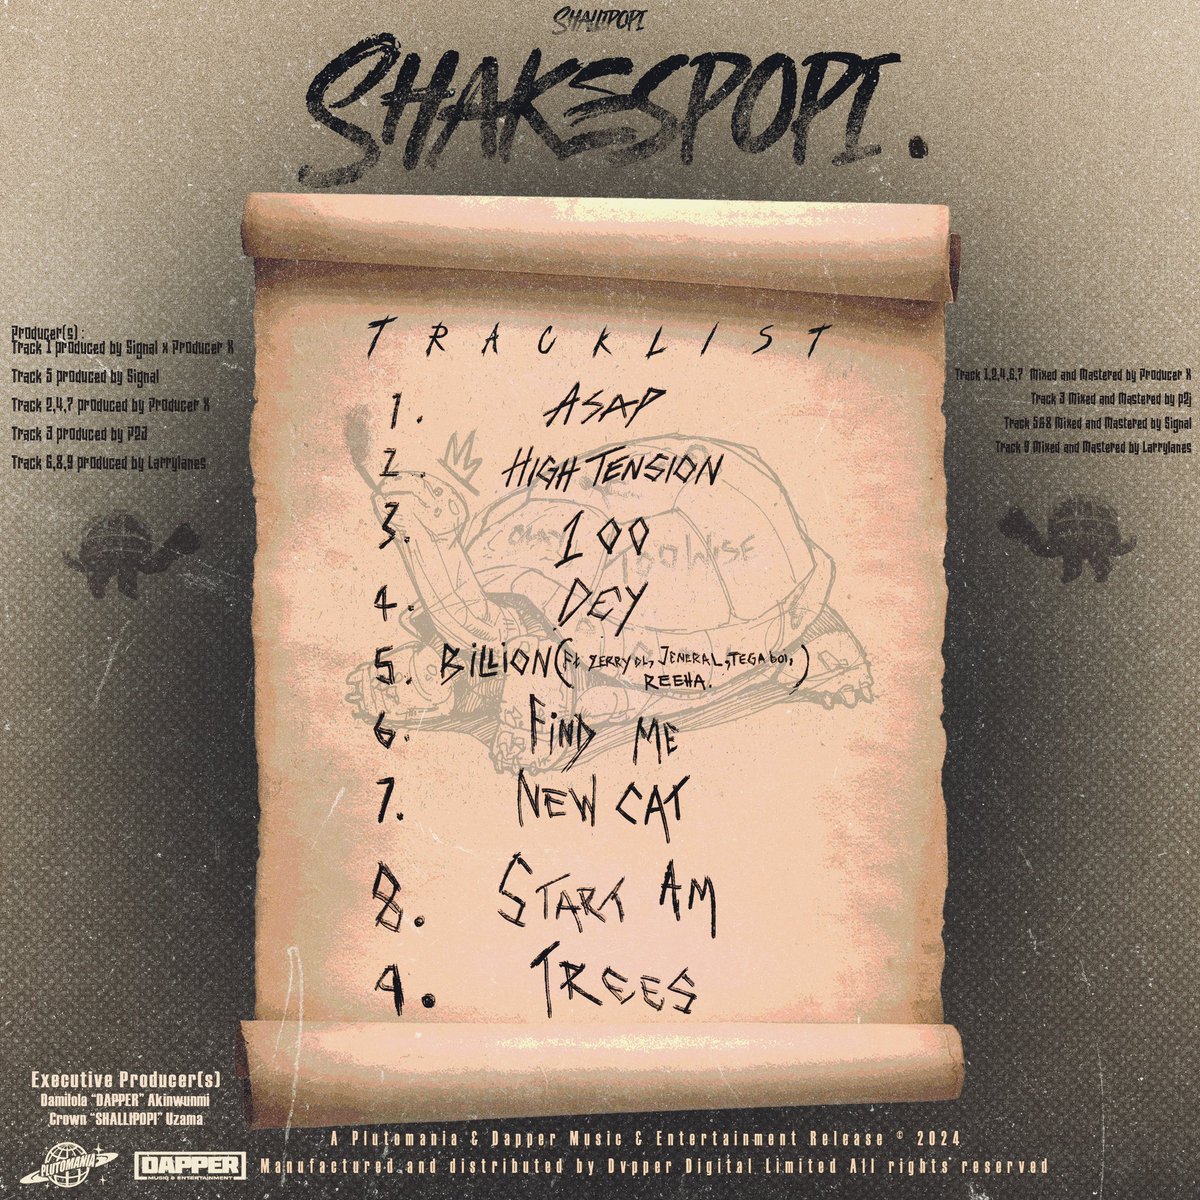 Rate shalipopi new album 1-10